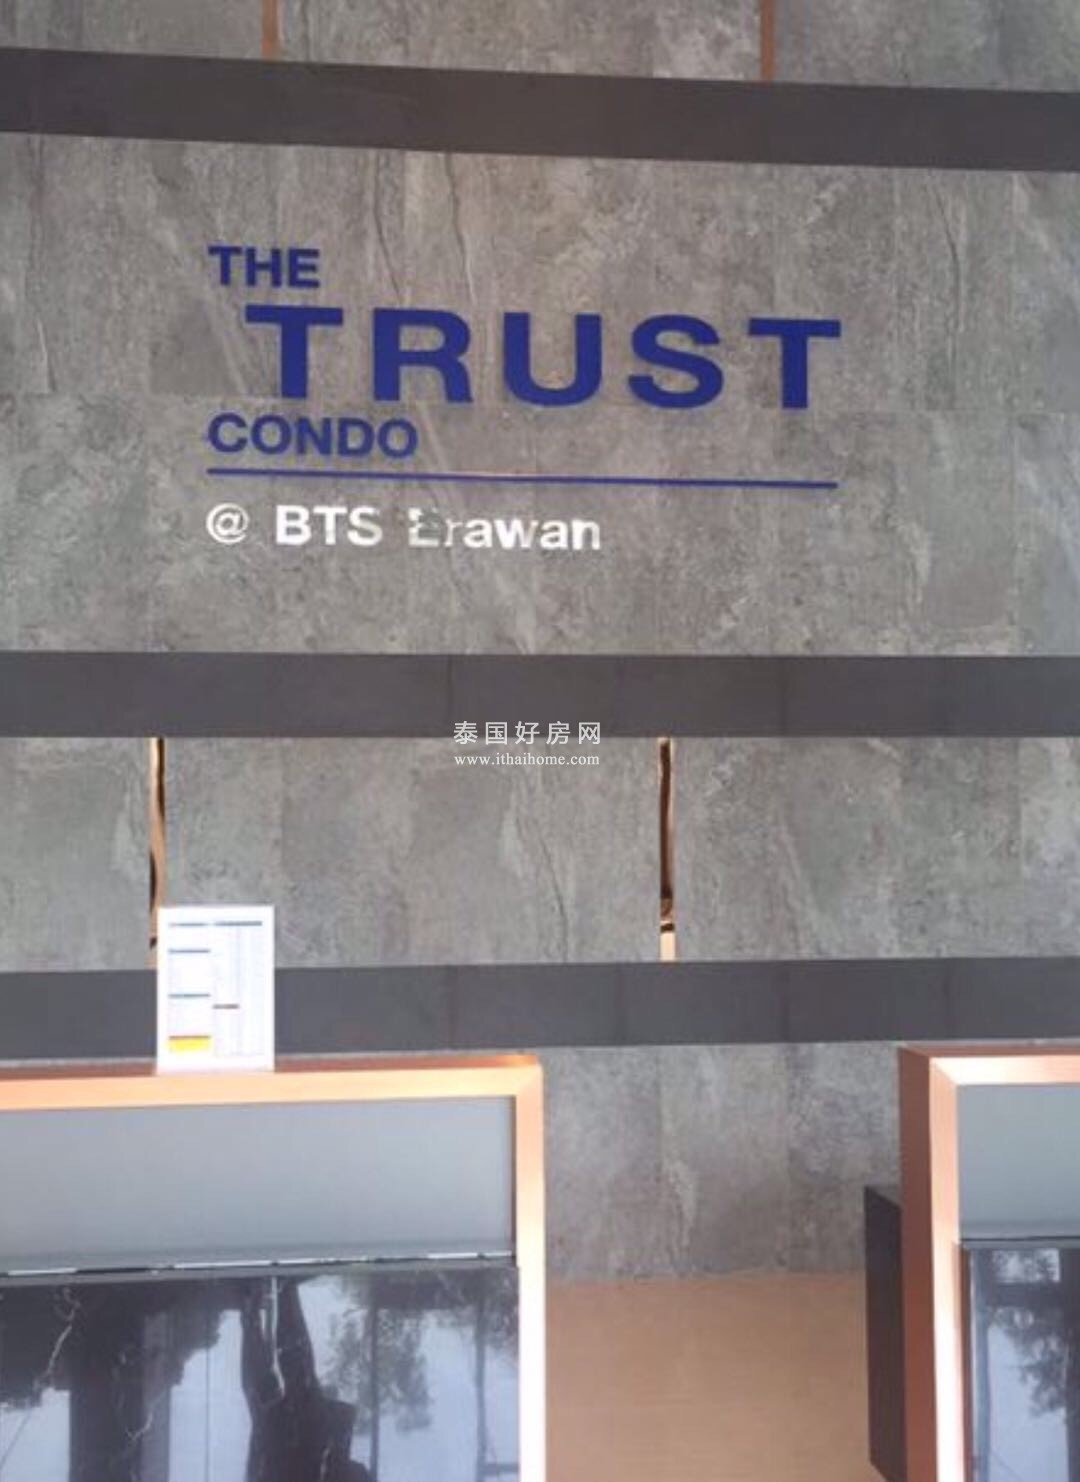 the trust condo @BTS Erawan by Qhouse